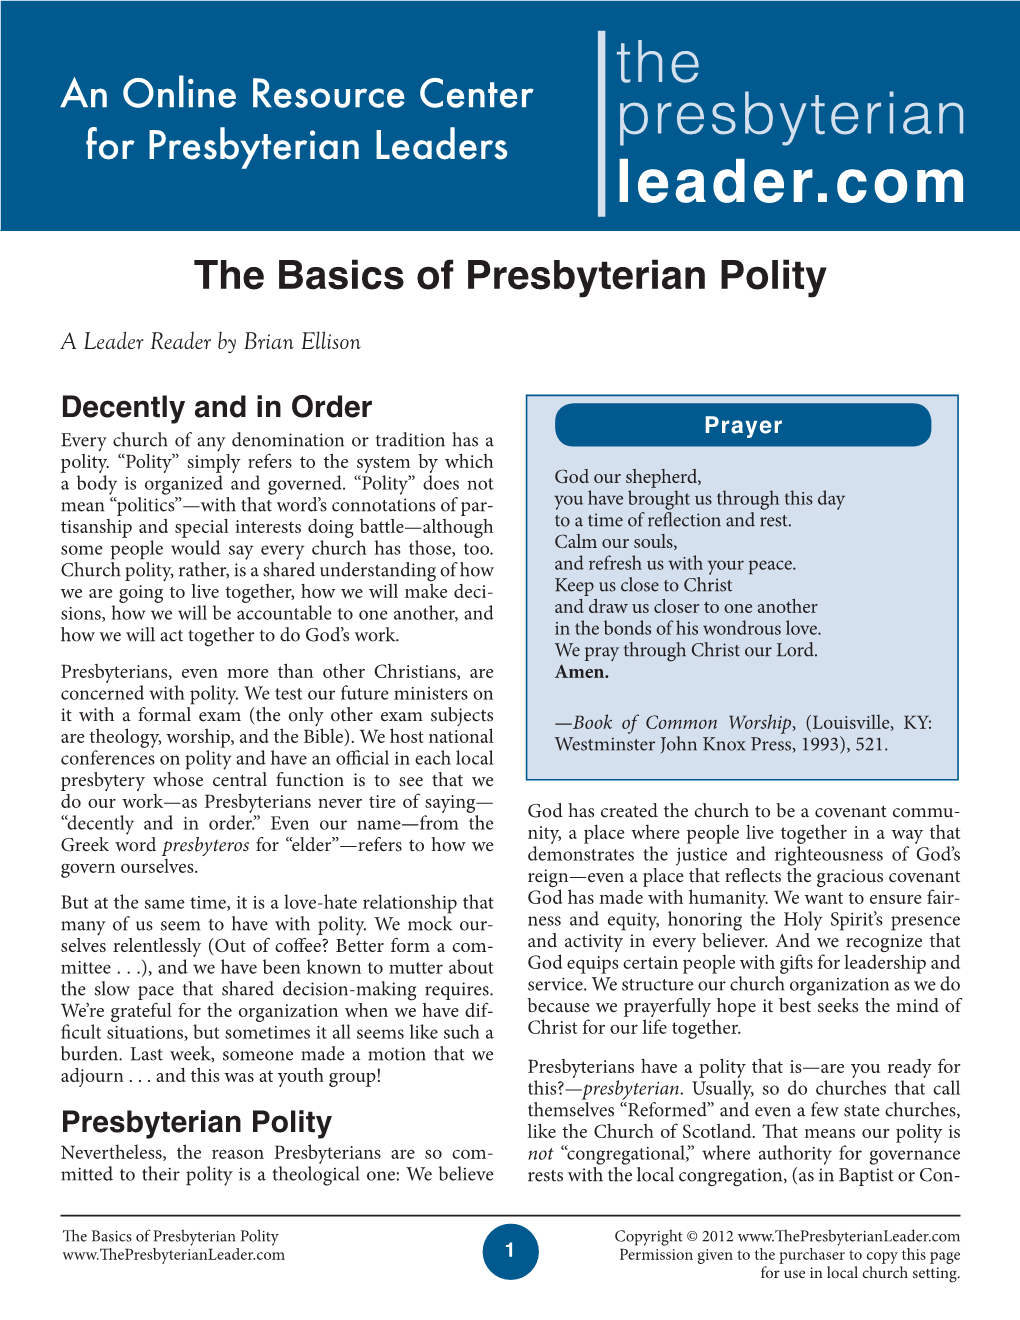 Presbyterian Polity a Leader Reader by Brian Ellison